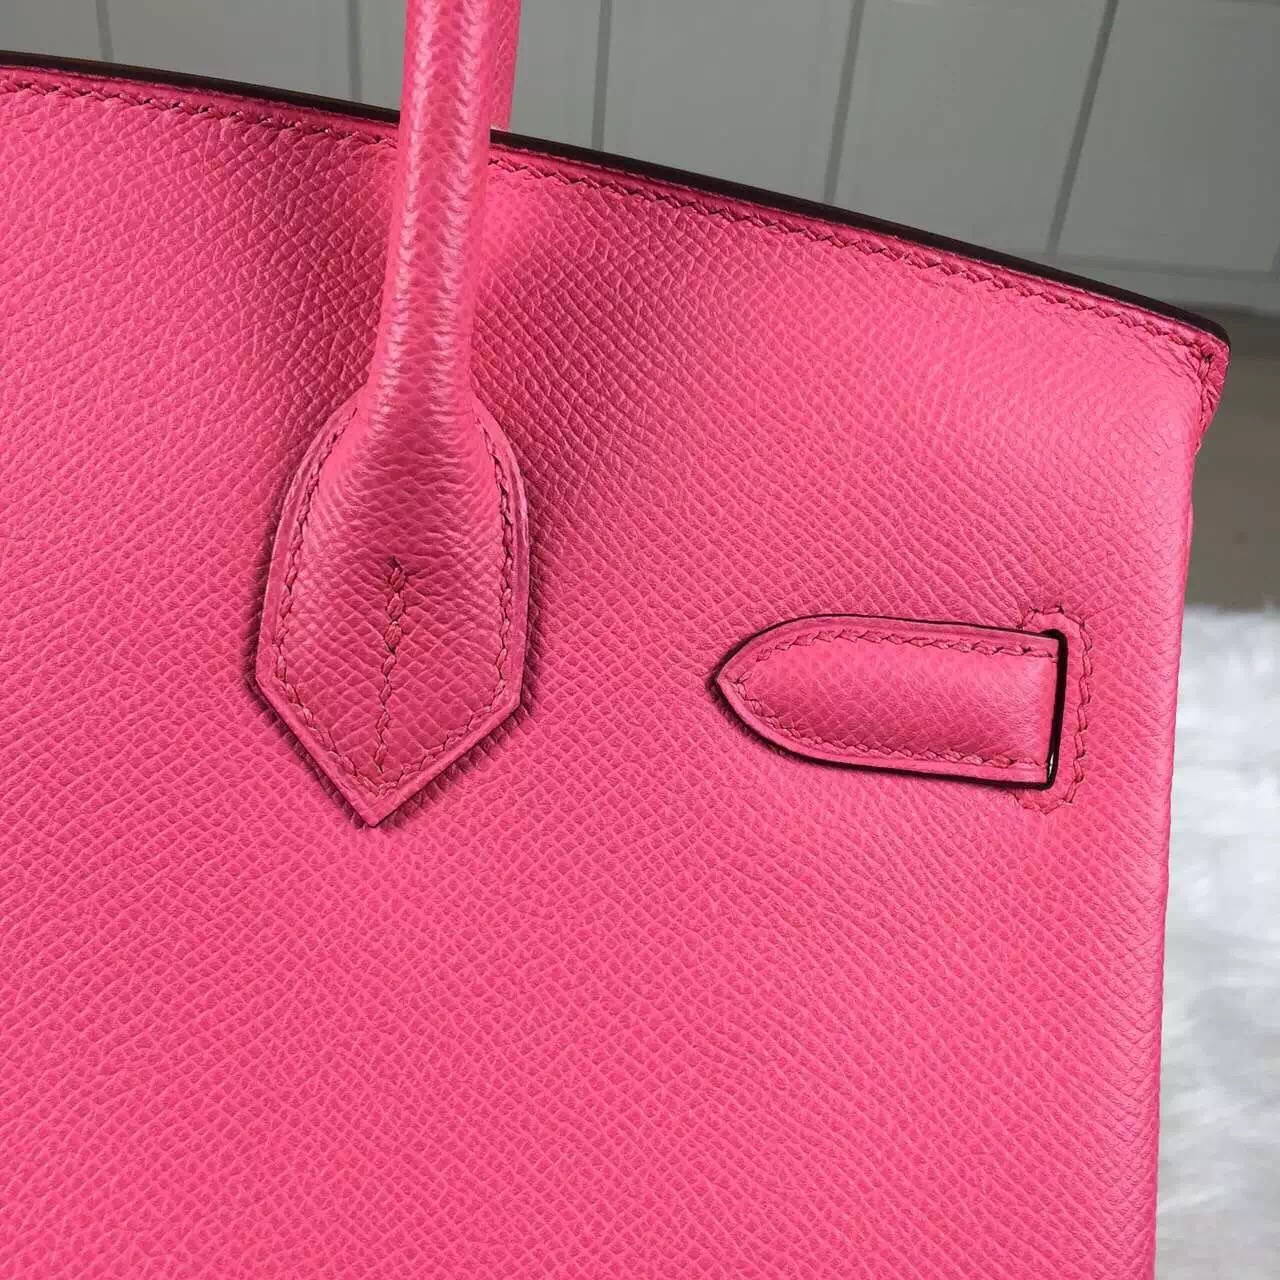 New Pretty Hermes Epsom Leather Birkin Bag30cm in 8W Rose Azalee